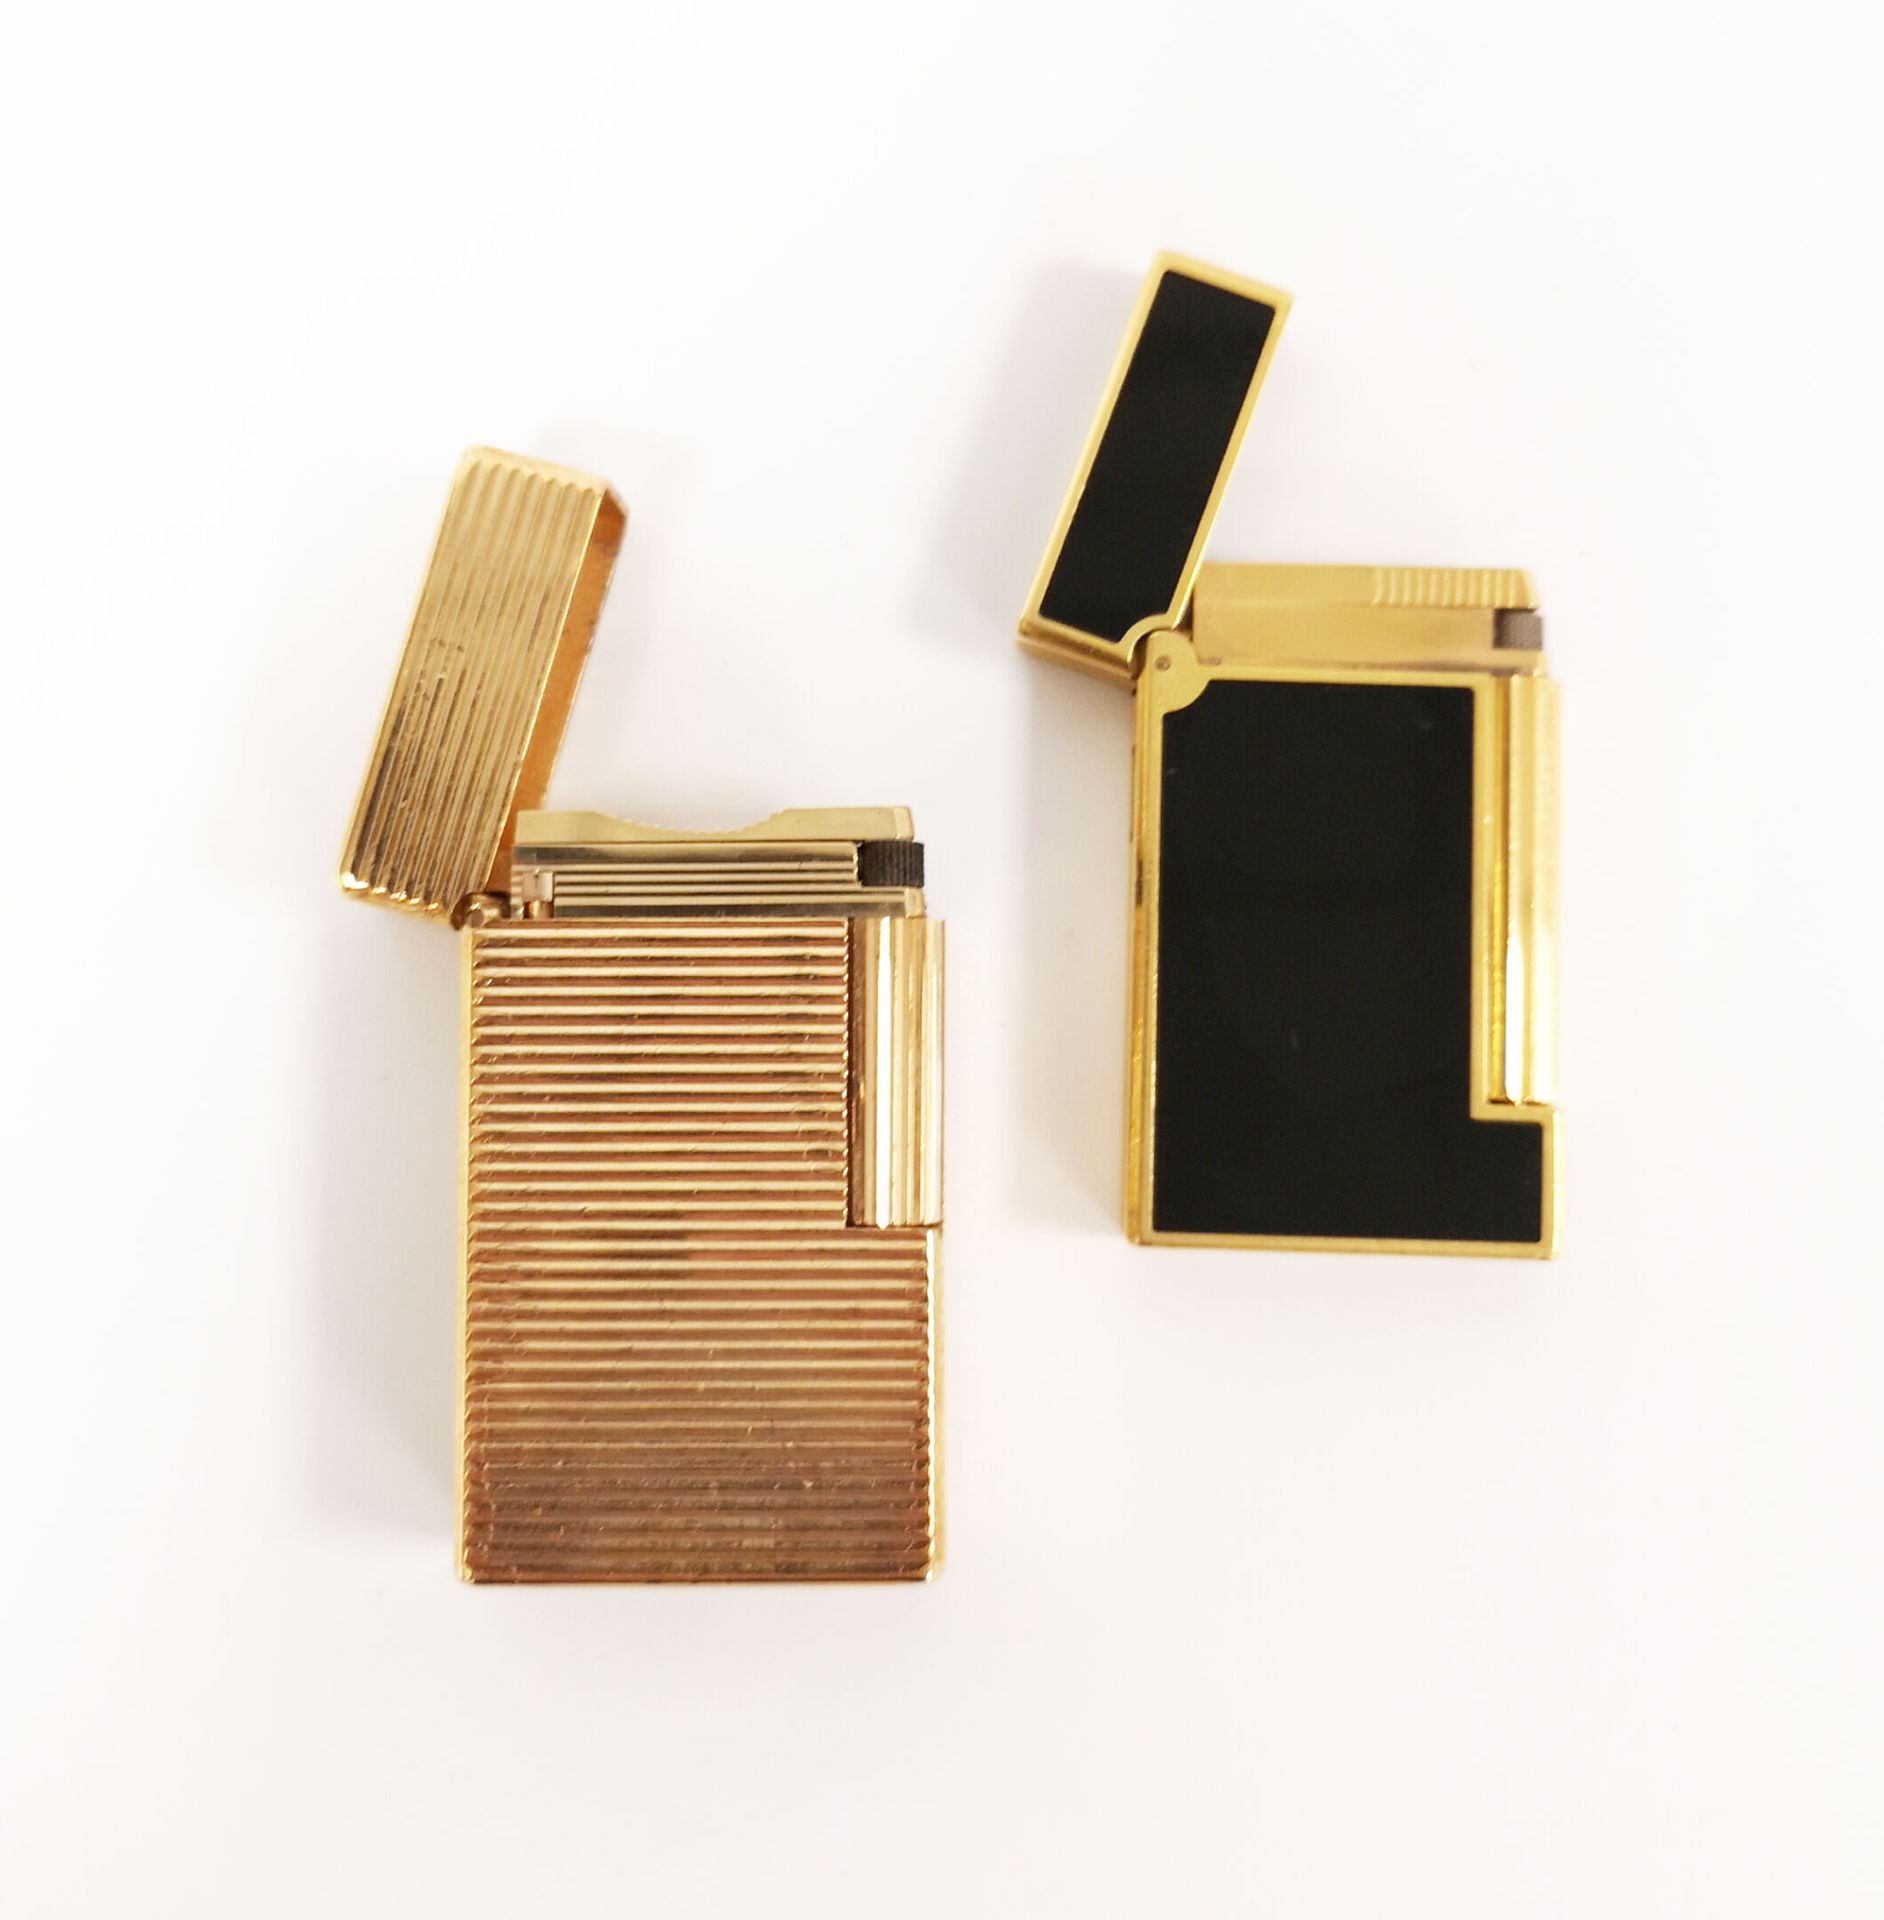 S. T. DUPONT Dos encendedores rectangulares :

- uno de metal dorado con ranuras&hellip;